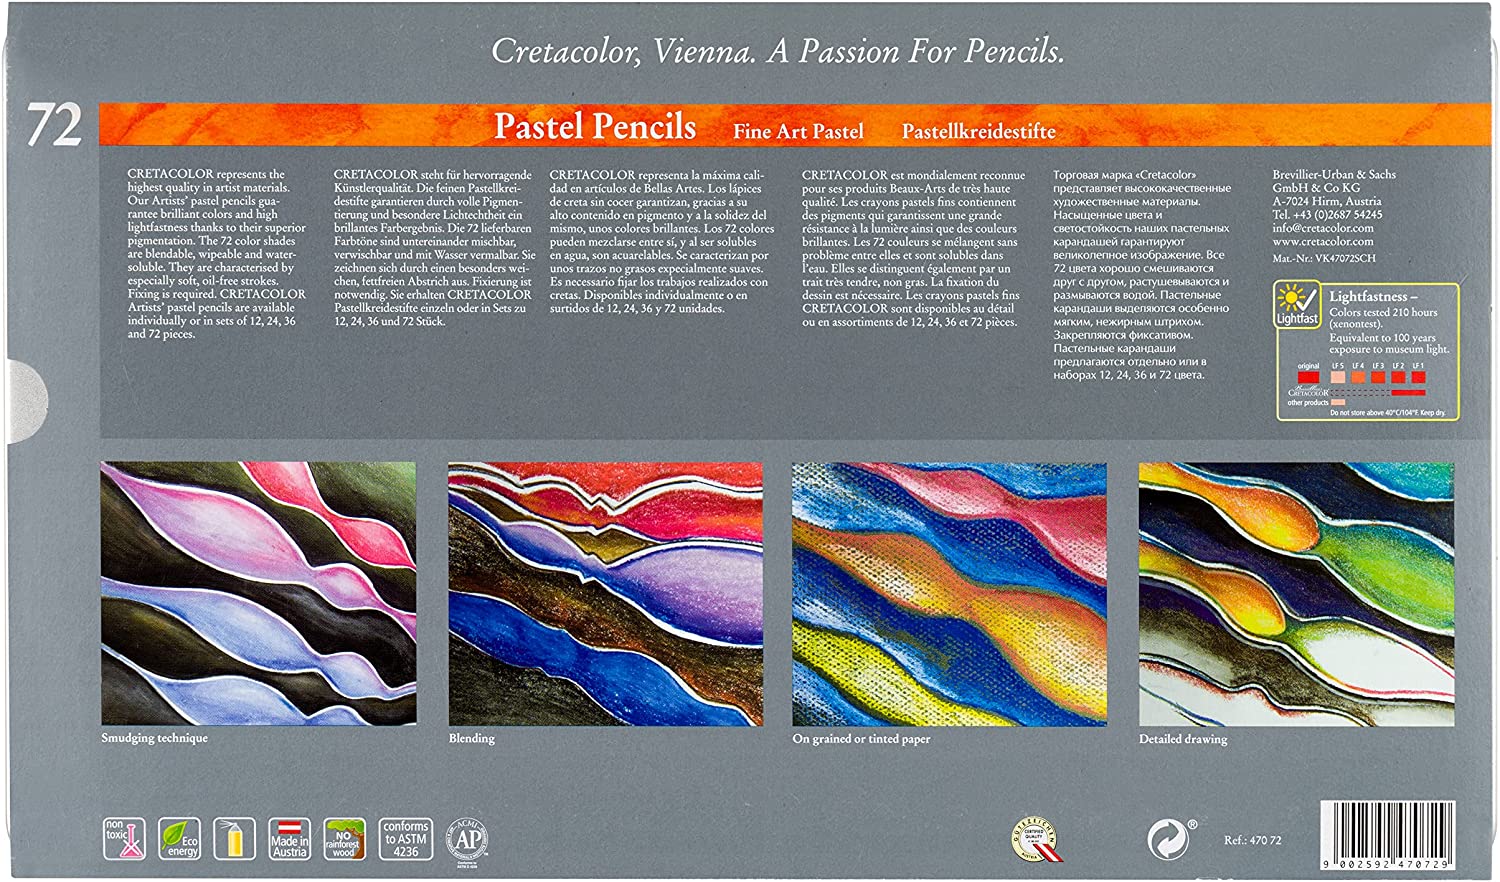 CRETA COLOR CRETACOLOR 470 Fine Art Pastel Pencils back part